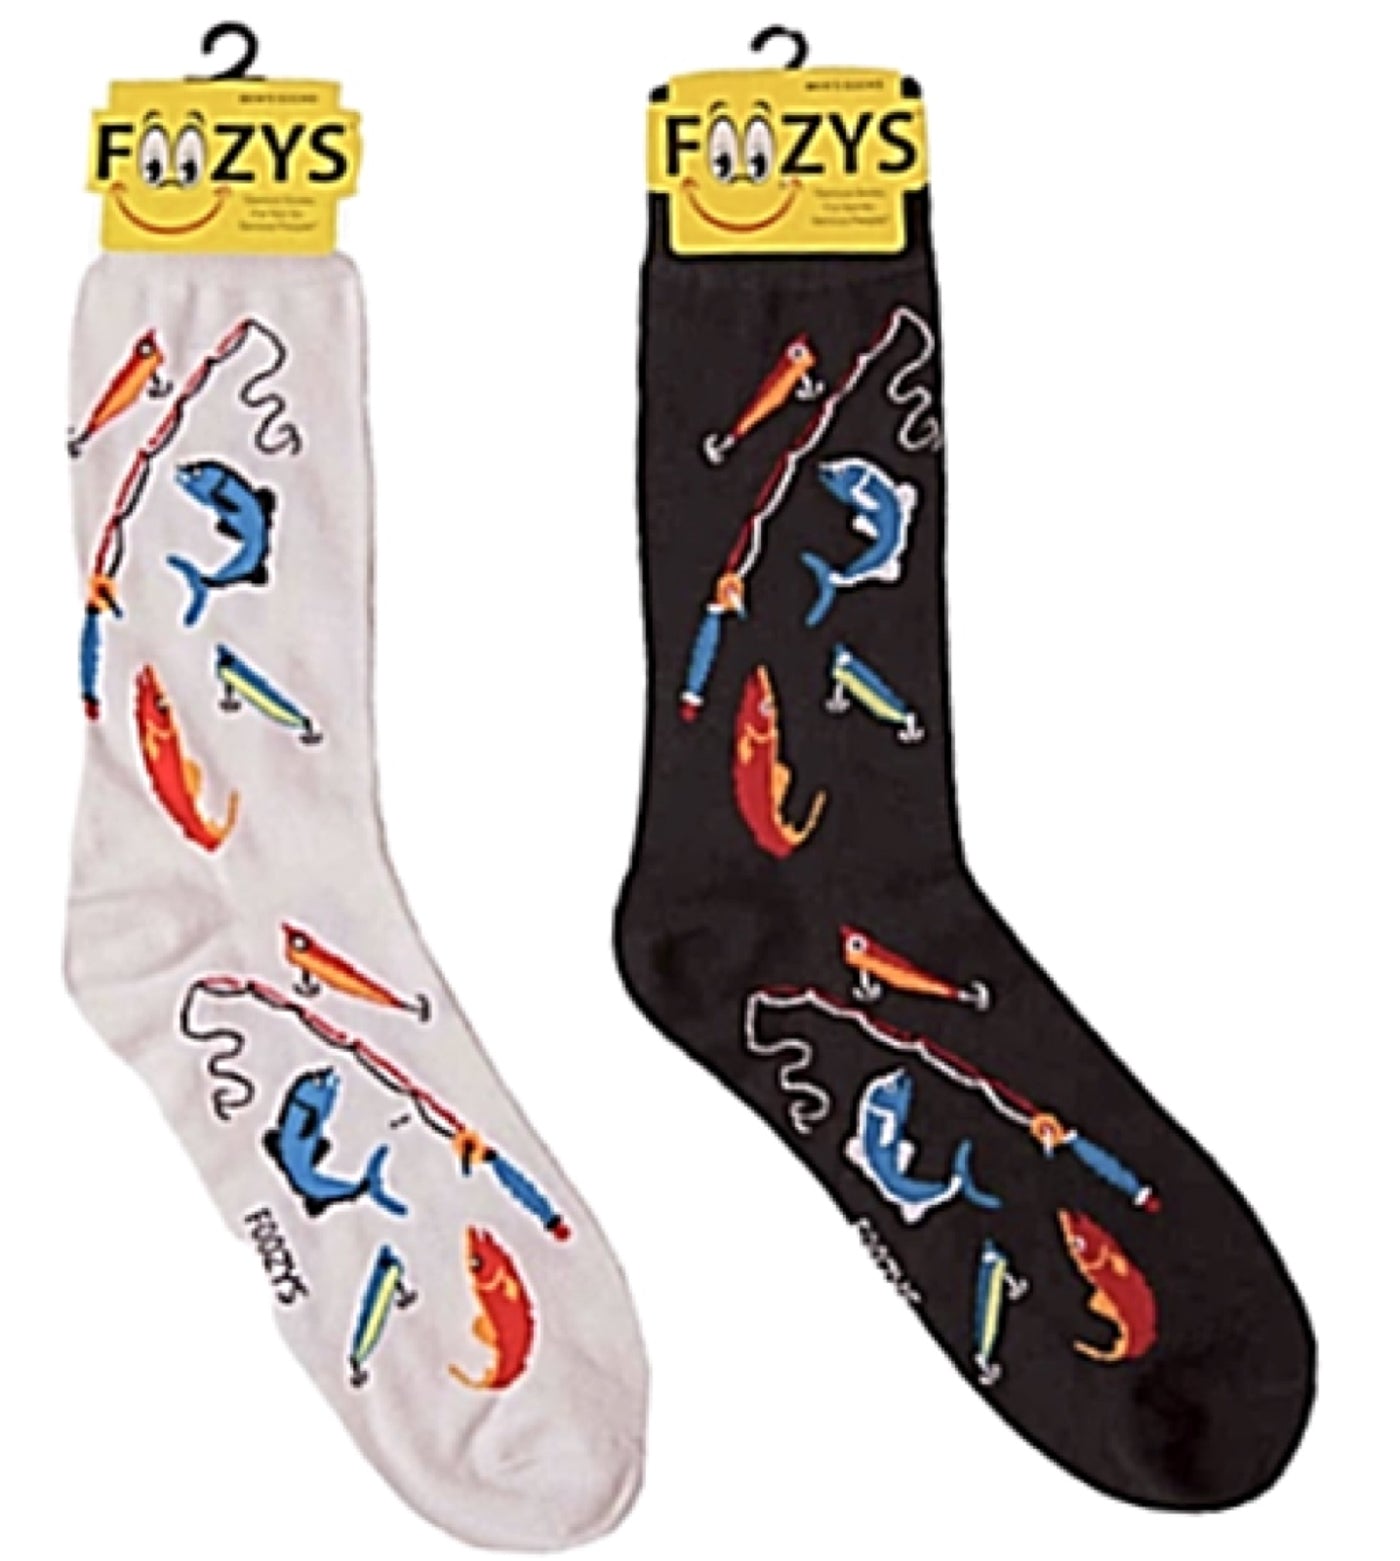 Foozys Fly Fishing Men's Socks - Two Pairs